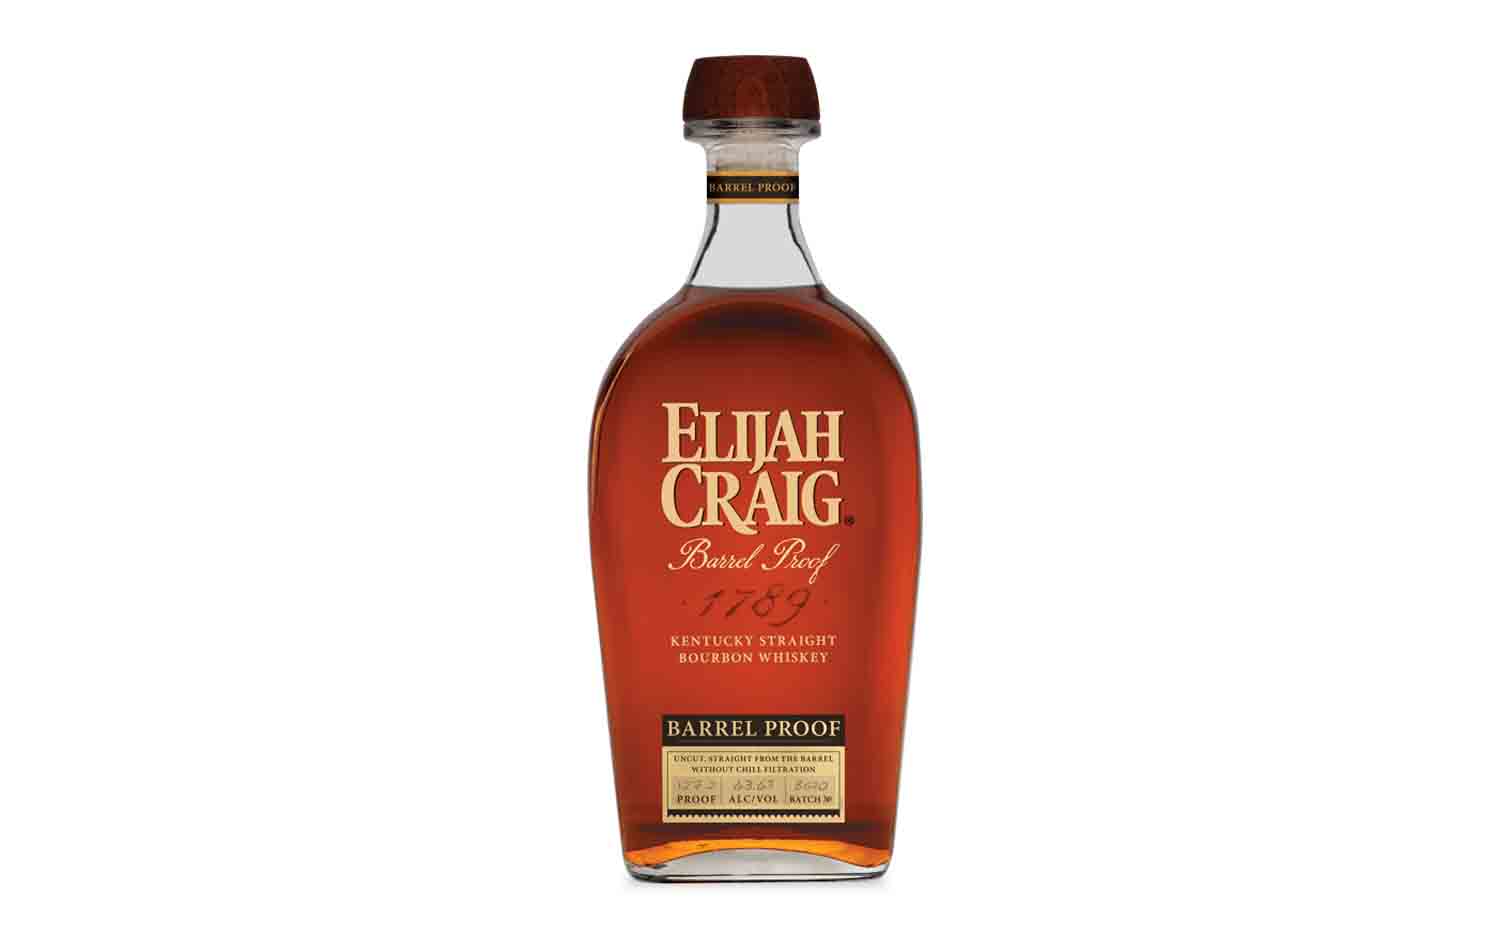 elijah craig barrel proof kentucky straight bourbon whiskey